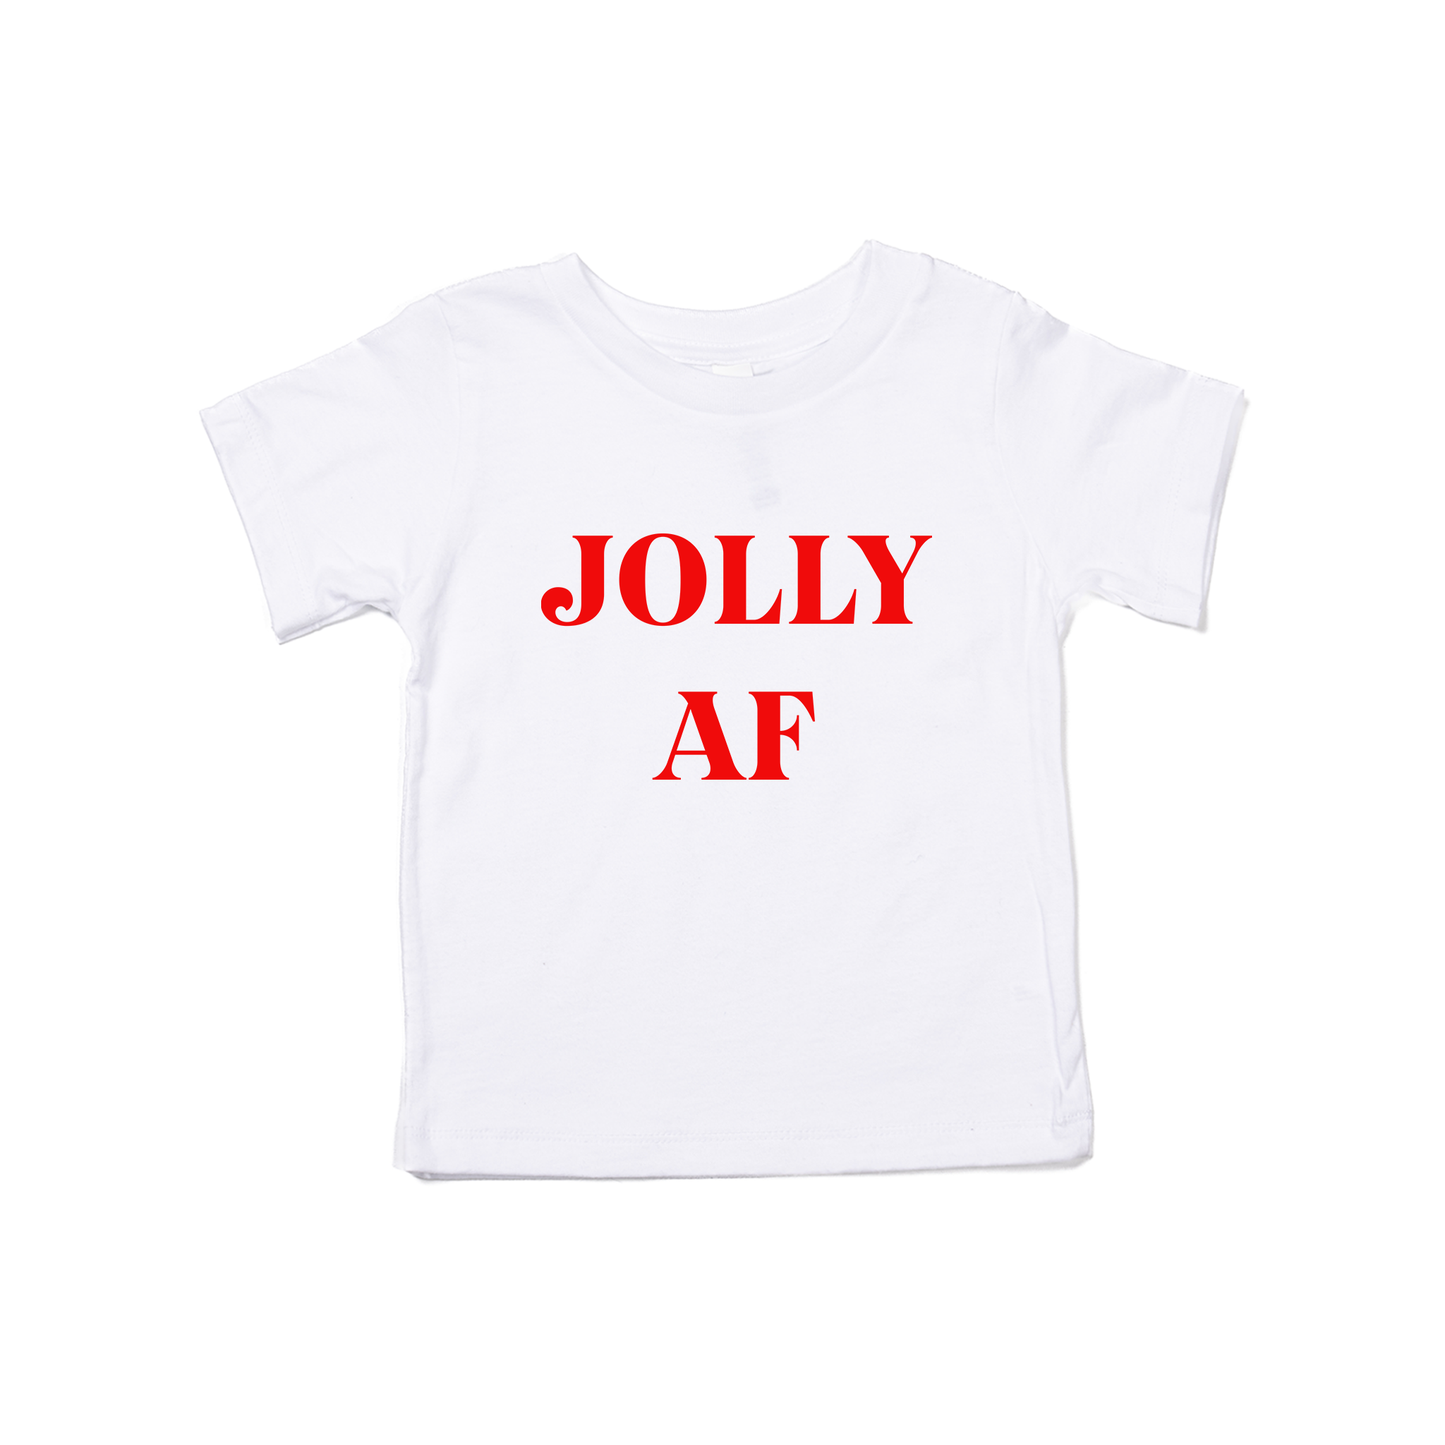 Jolly AF (Red) - Kids Tee (White)